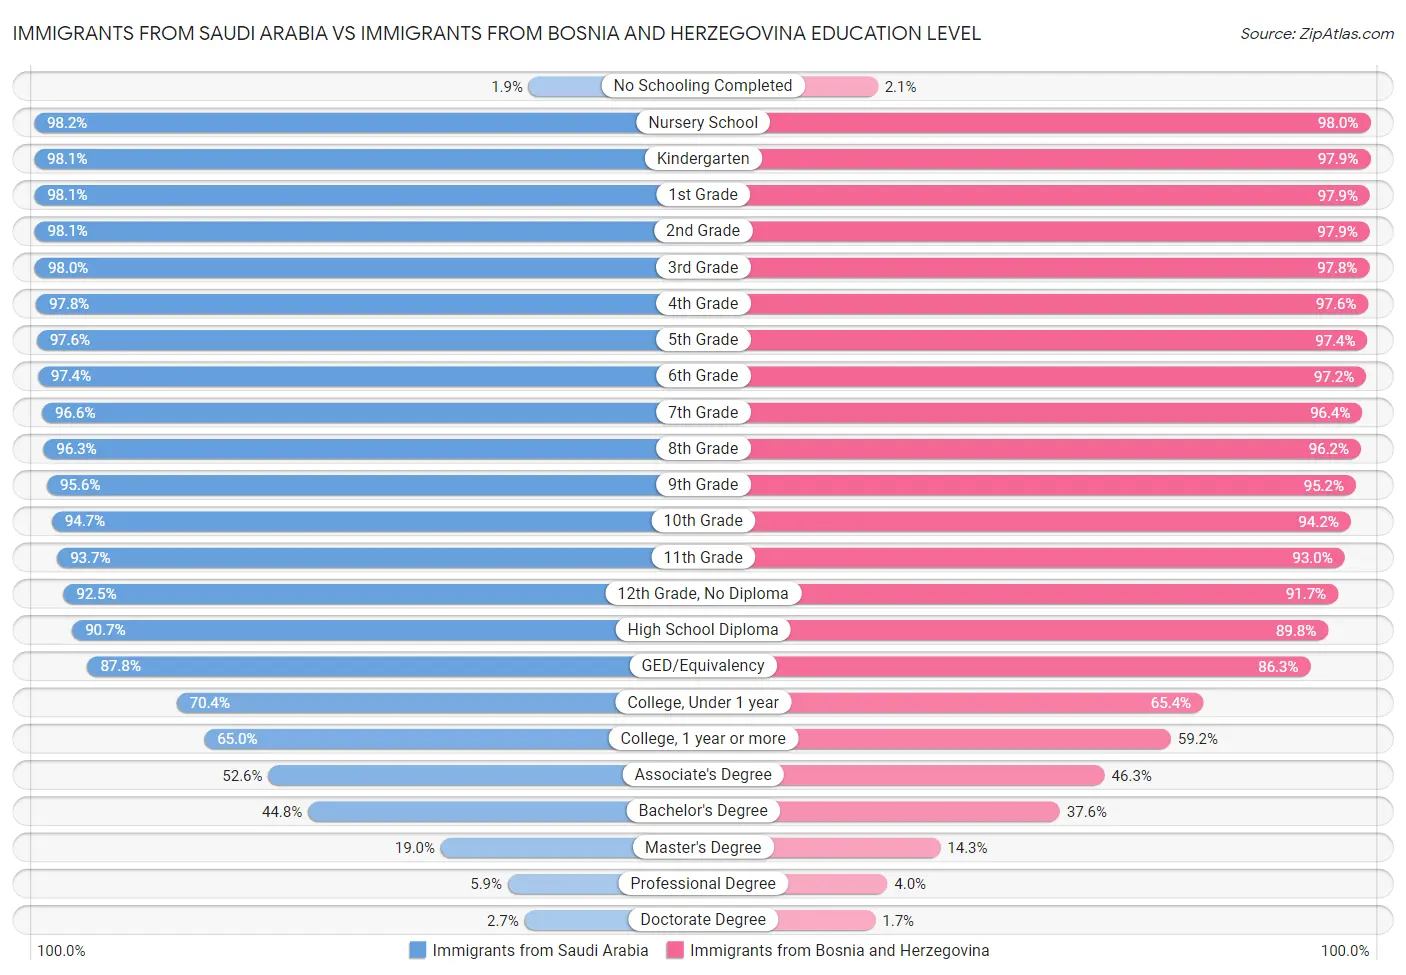 Immigrants from Saudi Arabia vs Immigrants from Bosnia and Herzegovina Education Level